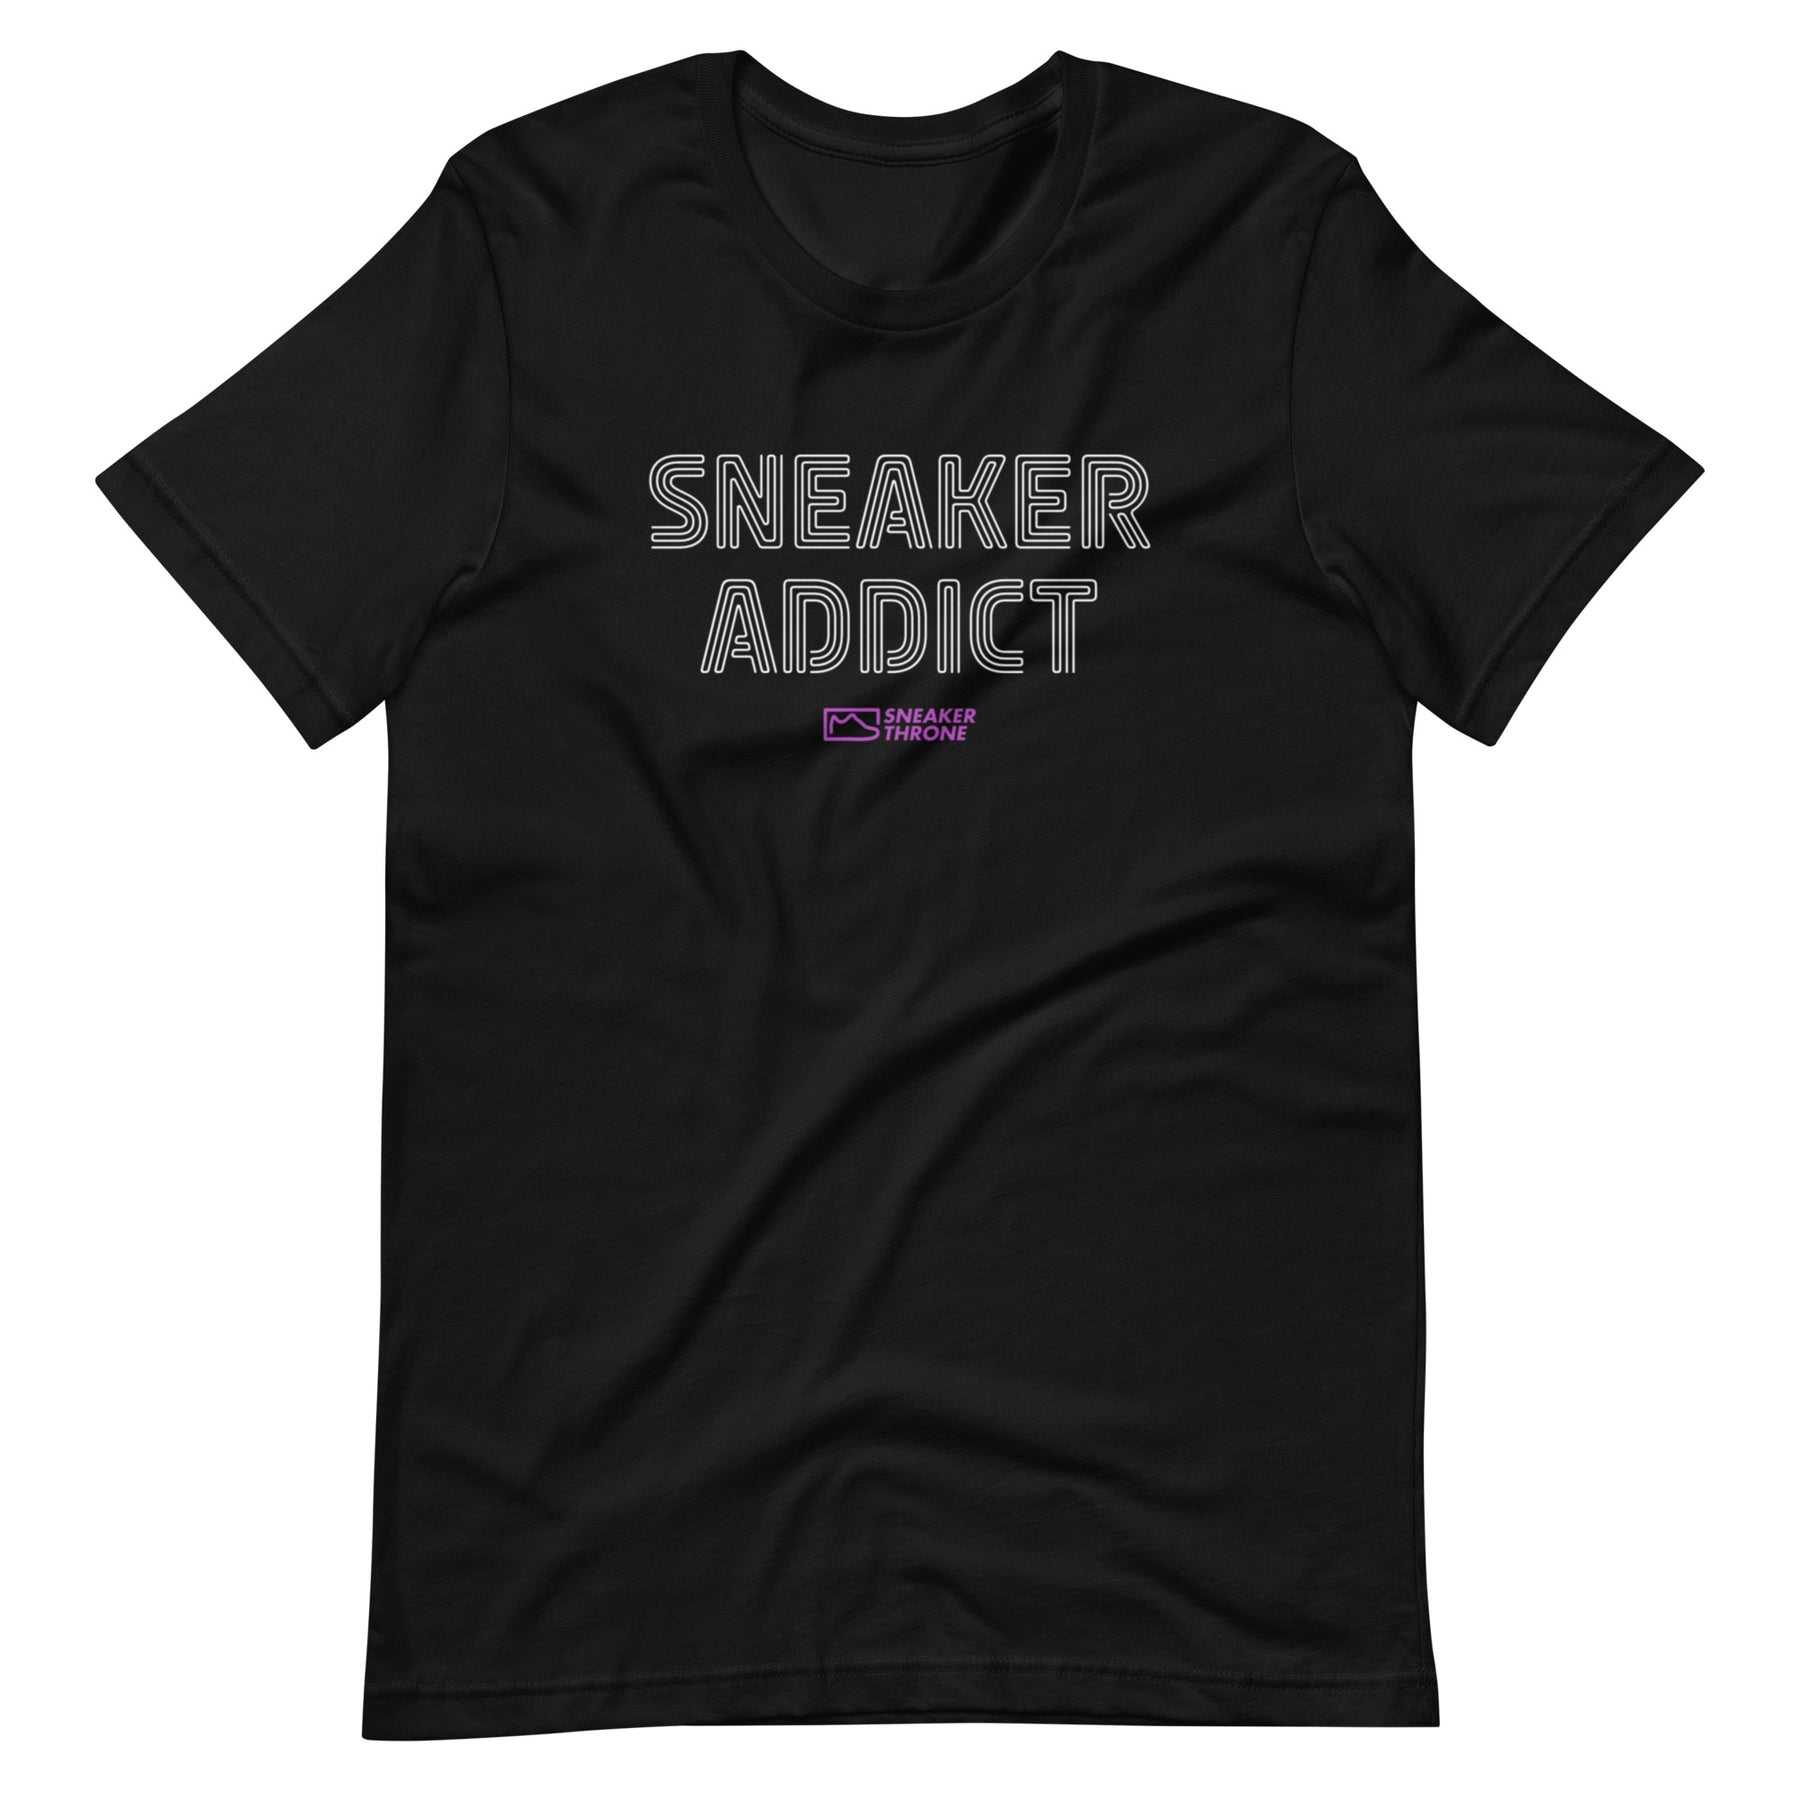 SNEAKER THRONE Sneaker Addict